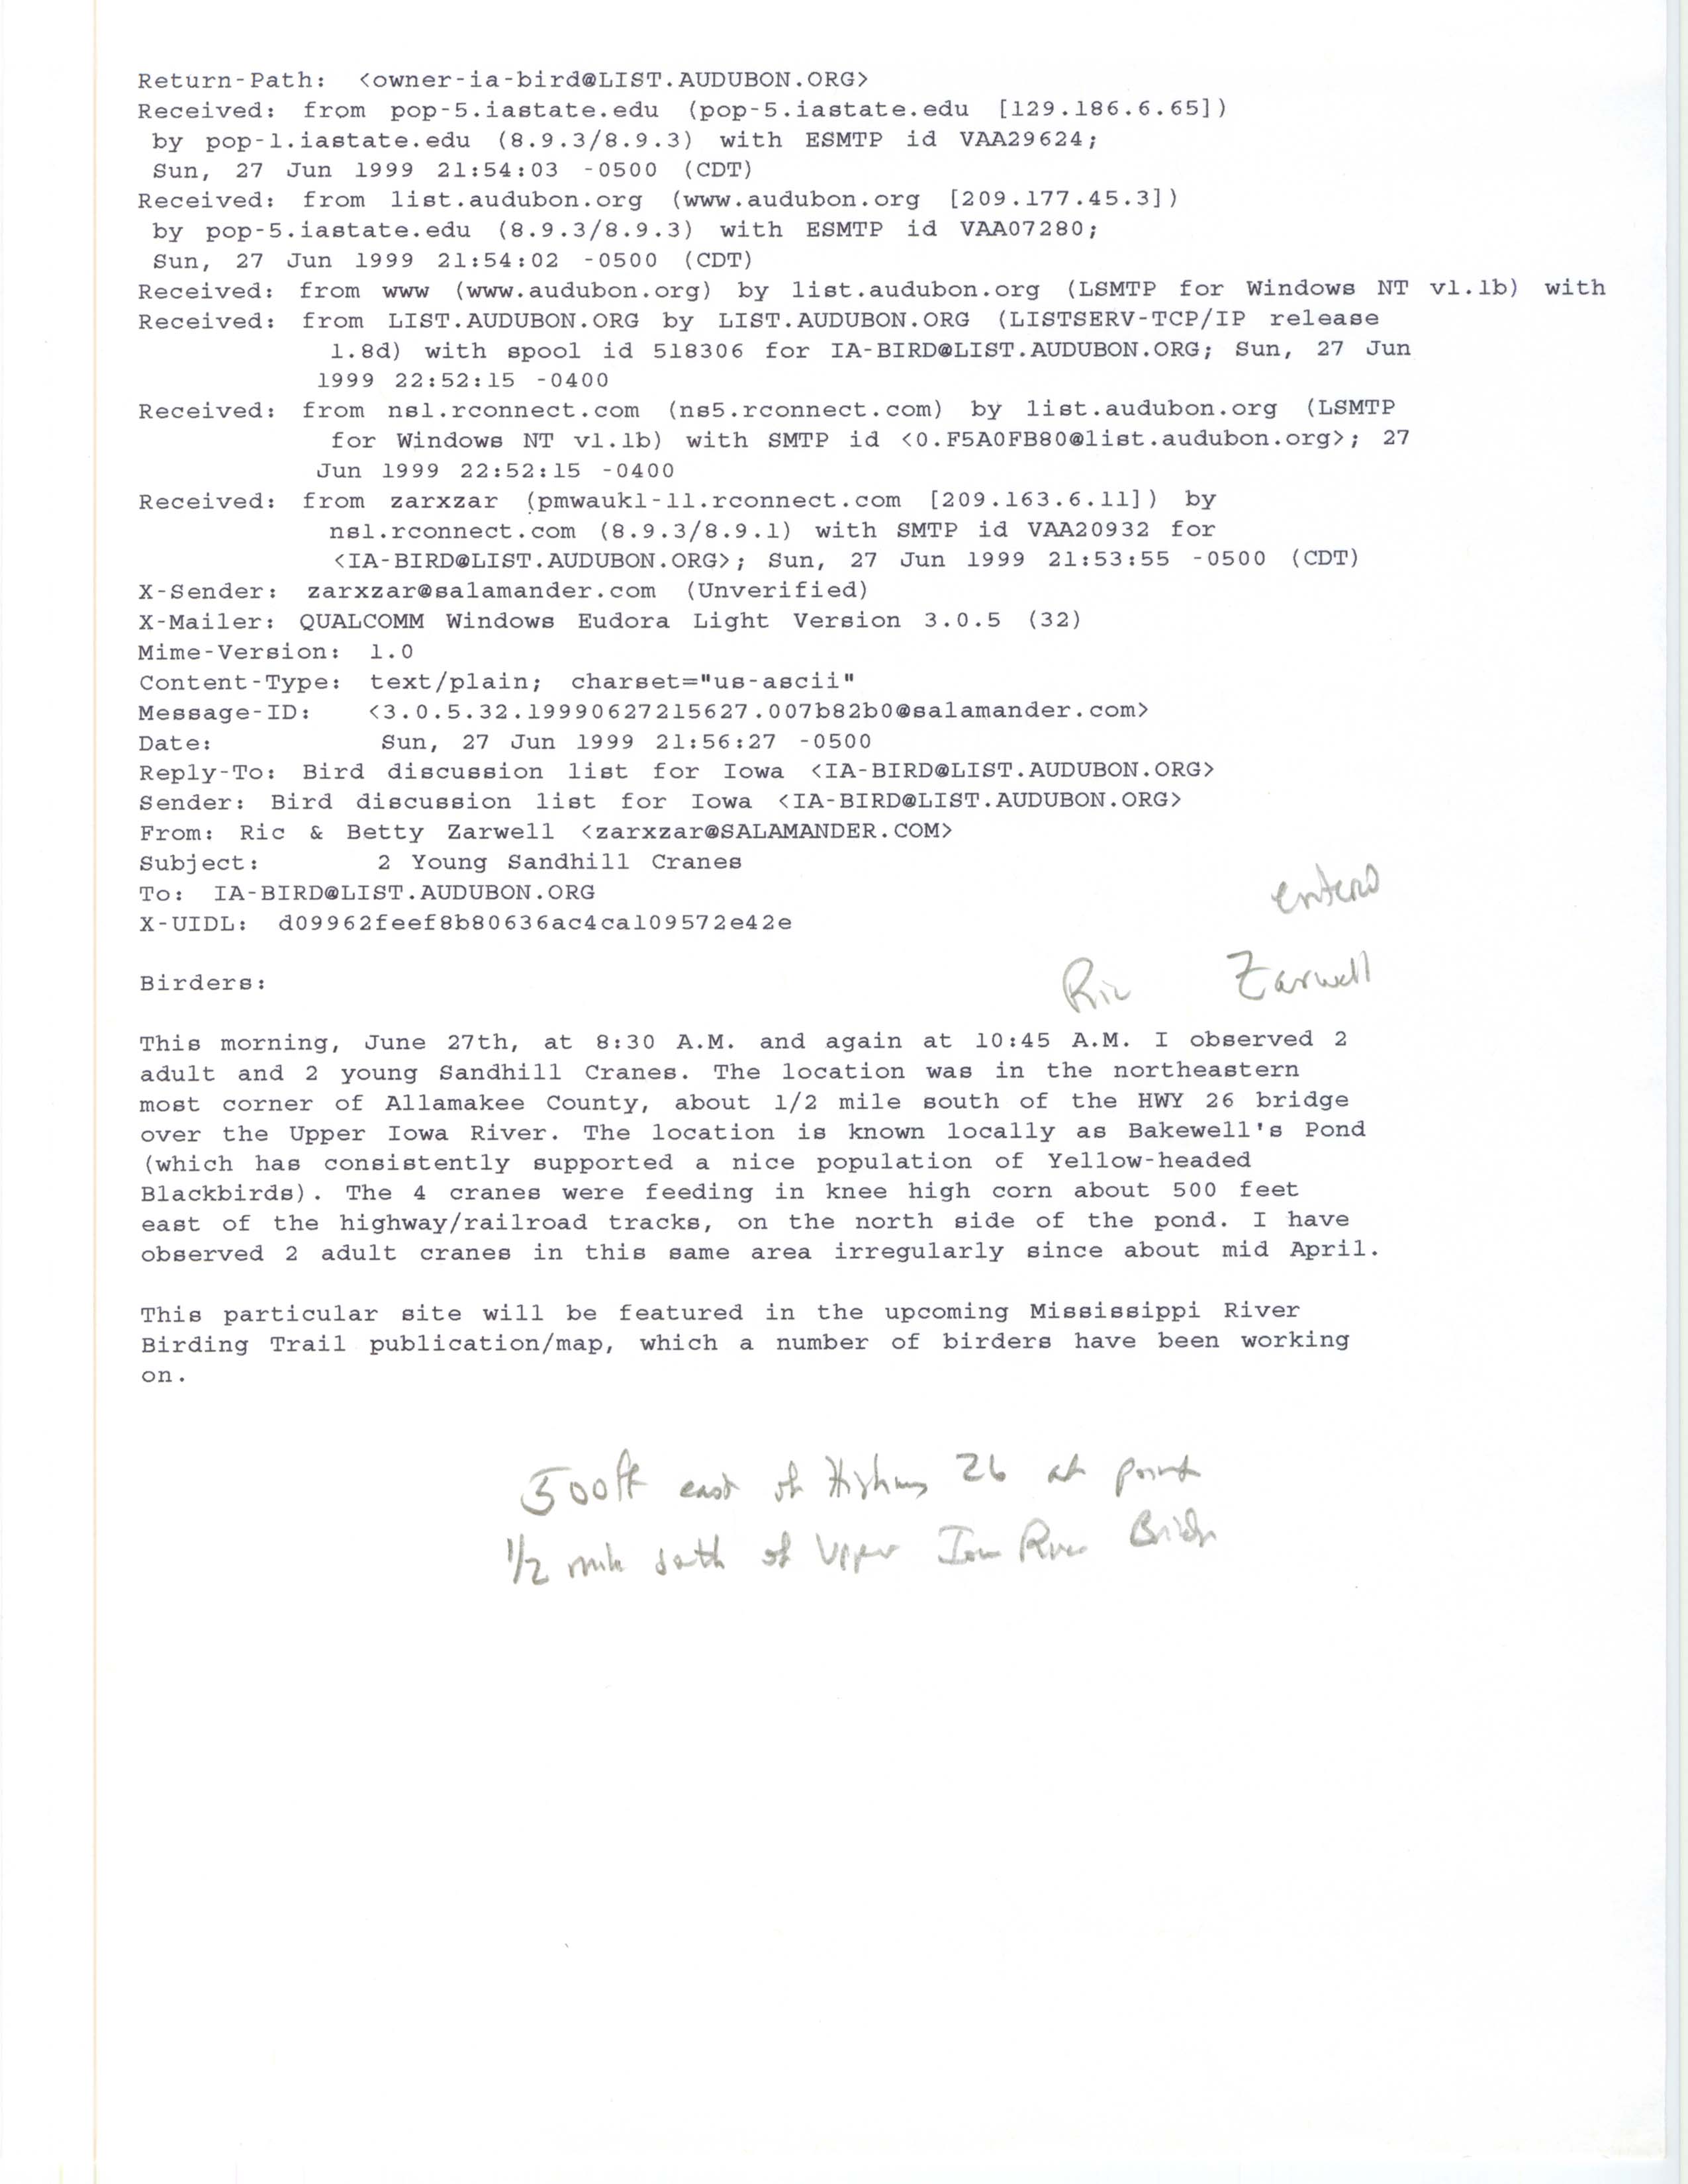 Ric & Betty Zarwell email to the Iowa Bird listserv regarding Sandhill Crane sighting, June 27, 1999